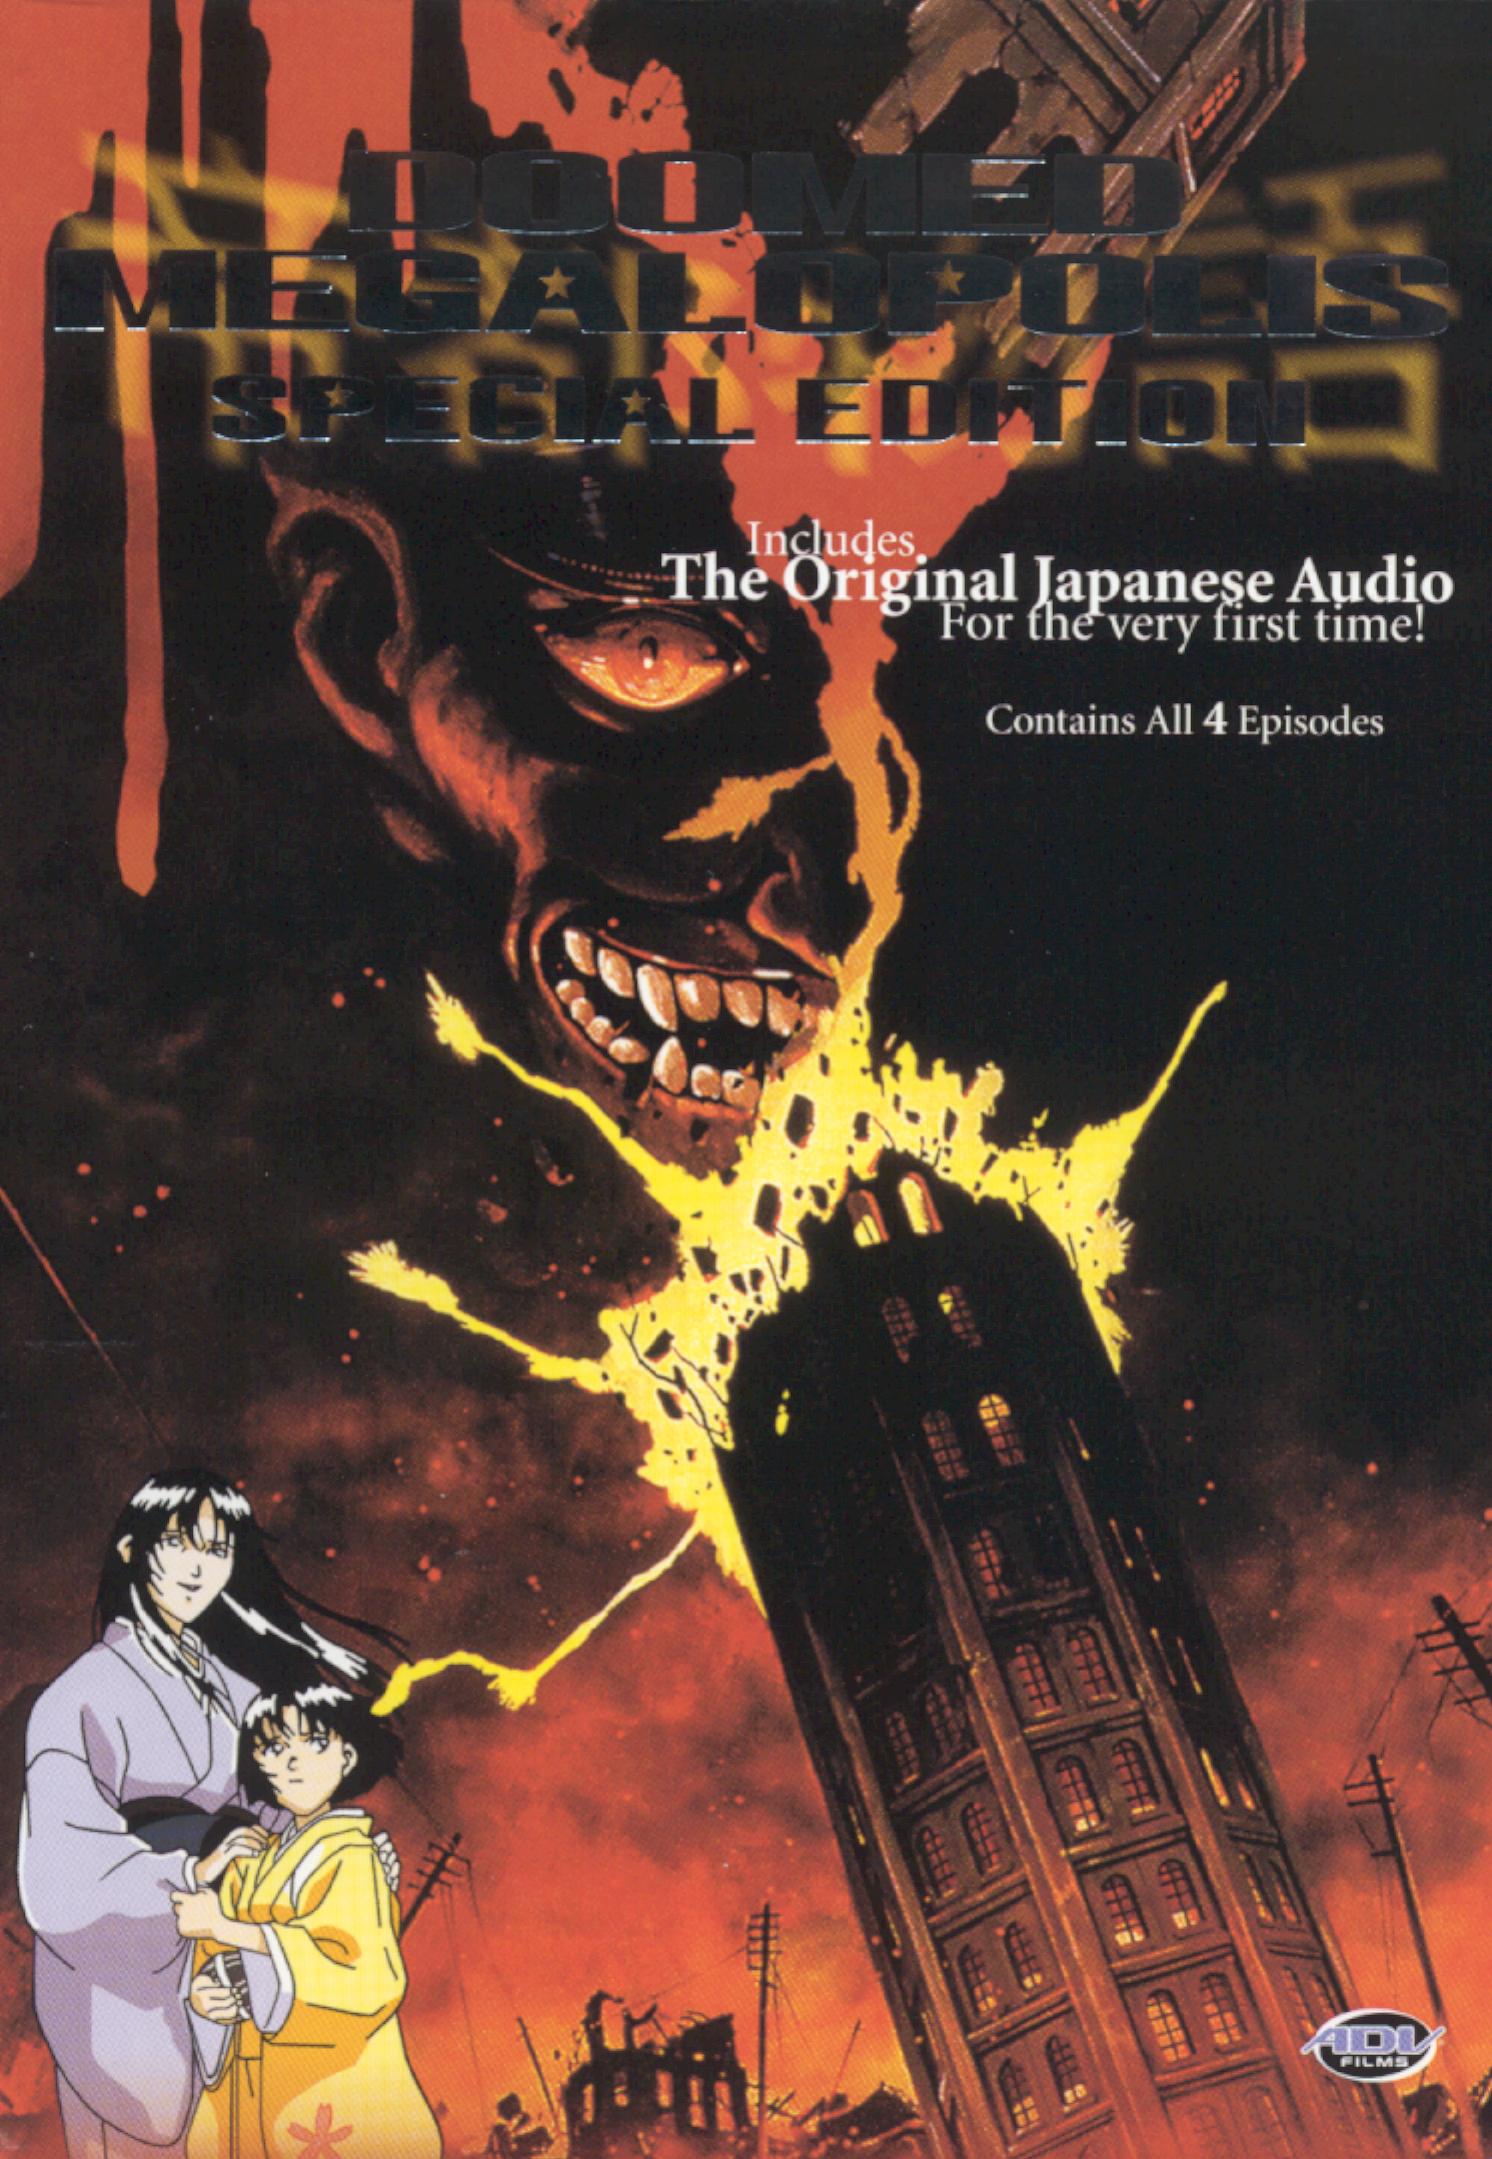 Doomed Megalopolis - 1993 - Original Video Poster – Poster Freaks